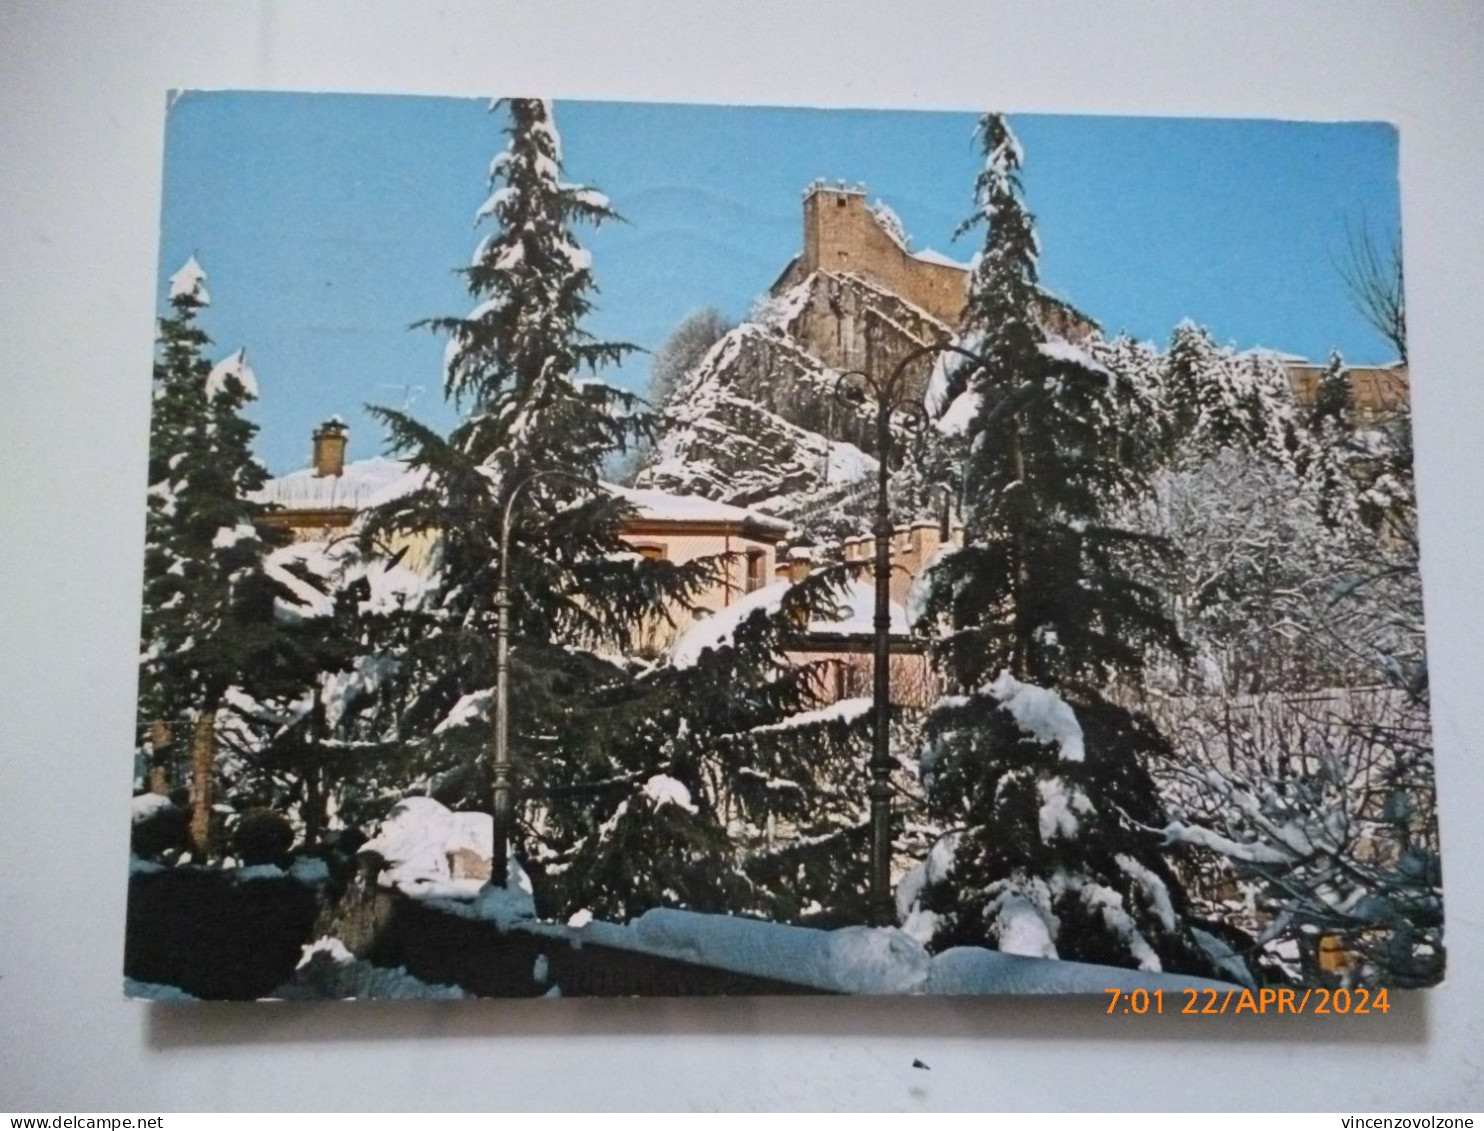 Cartolina Viaggiata "SESTOLA" 1980 - Modena